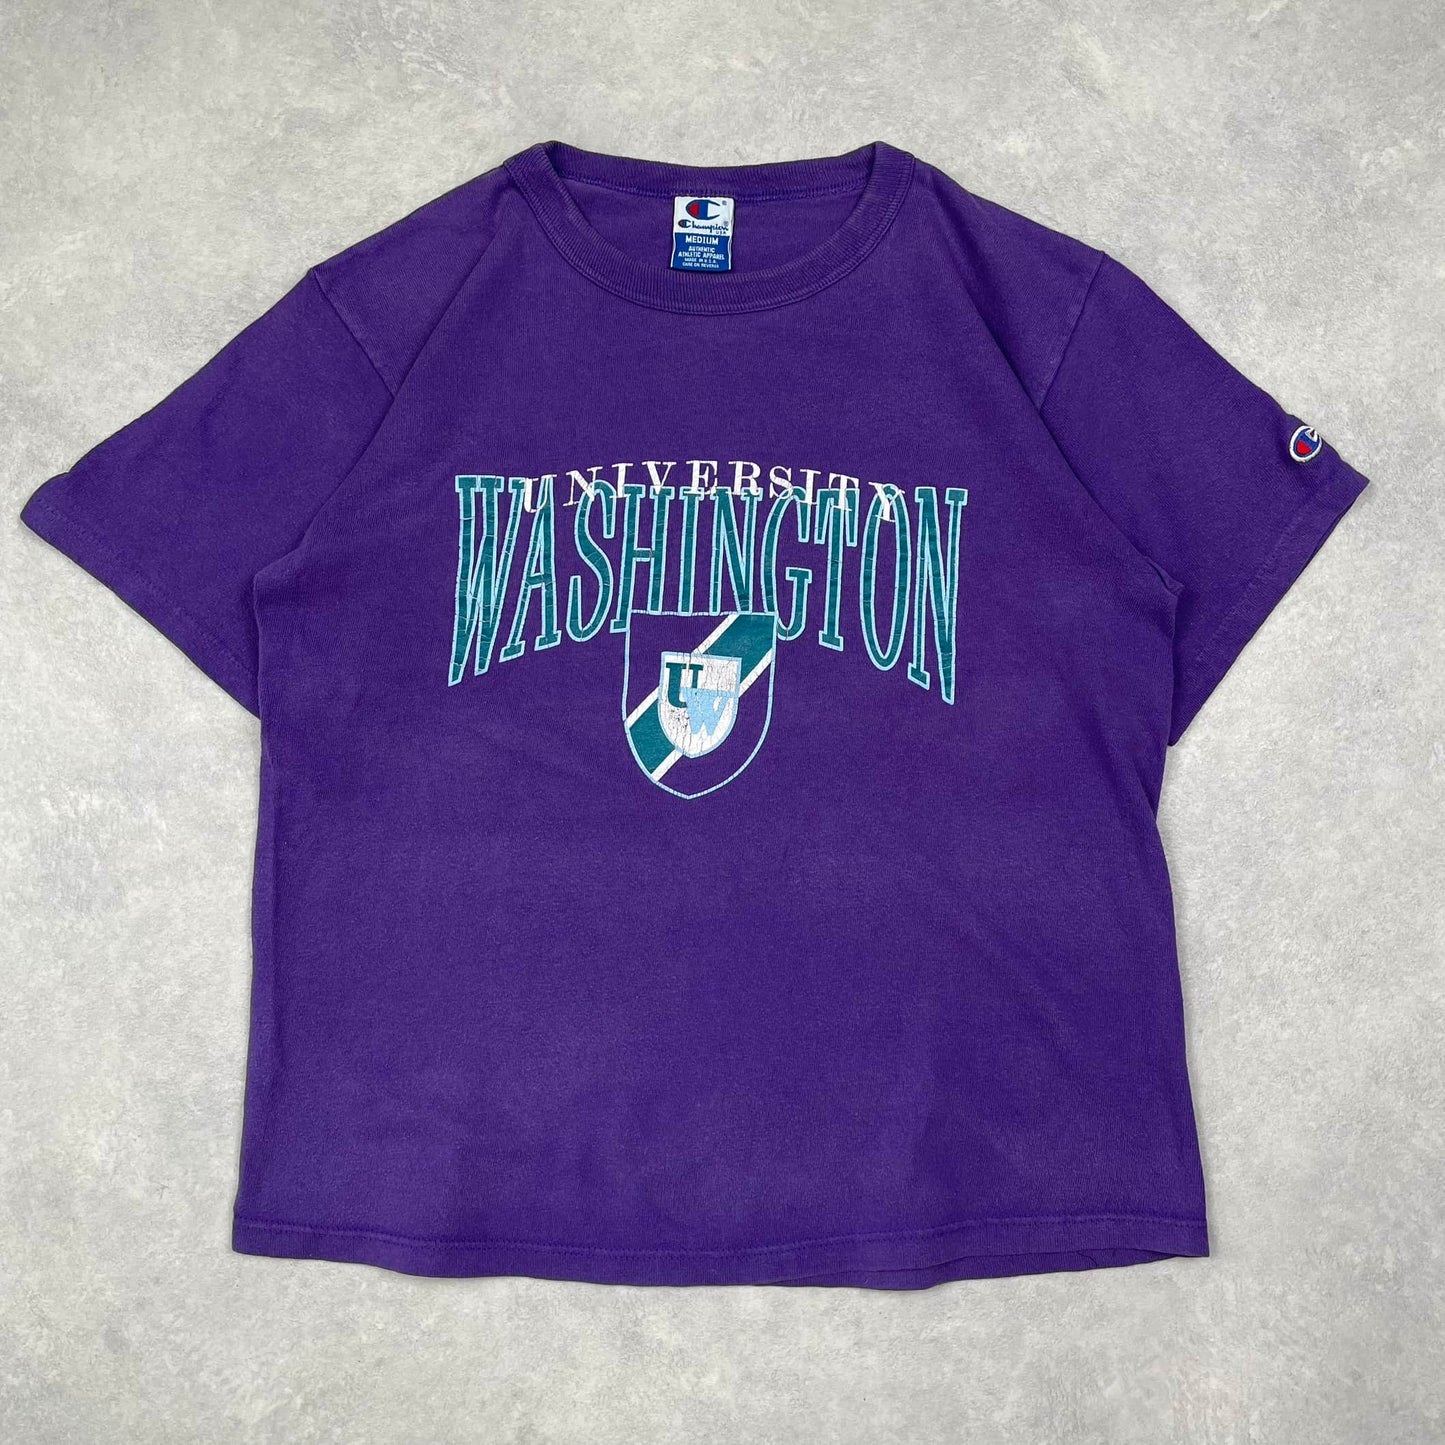 Vintage Champion Single Stitch T-Shirt "Washington University" Made in USA